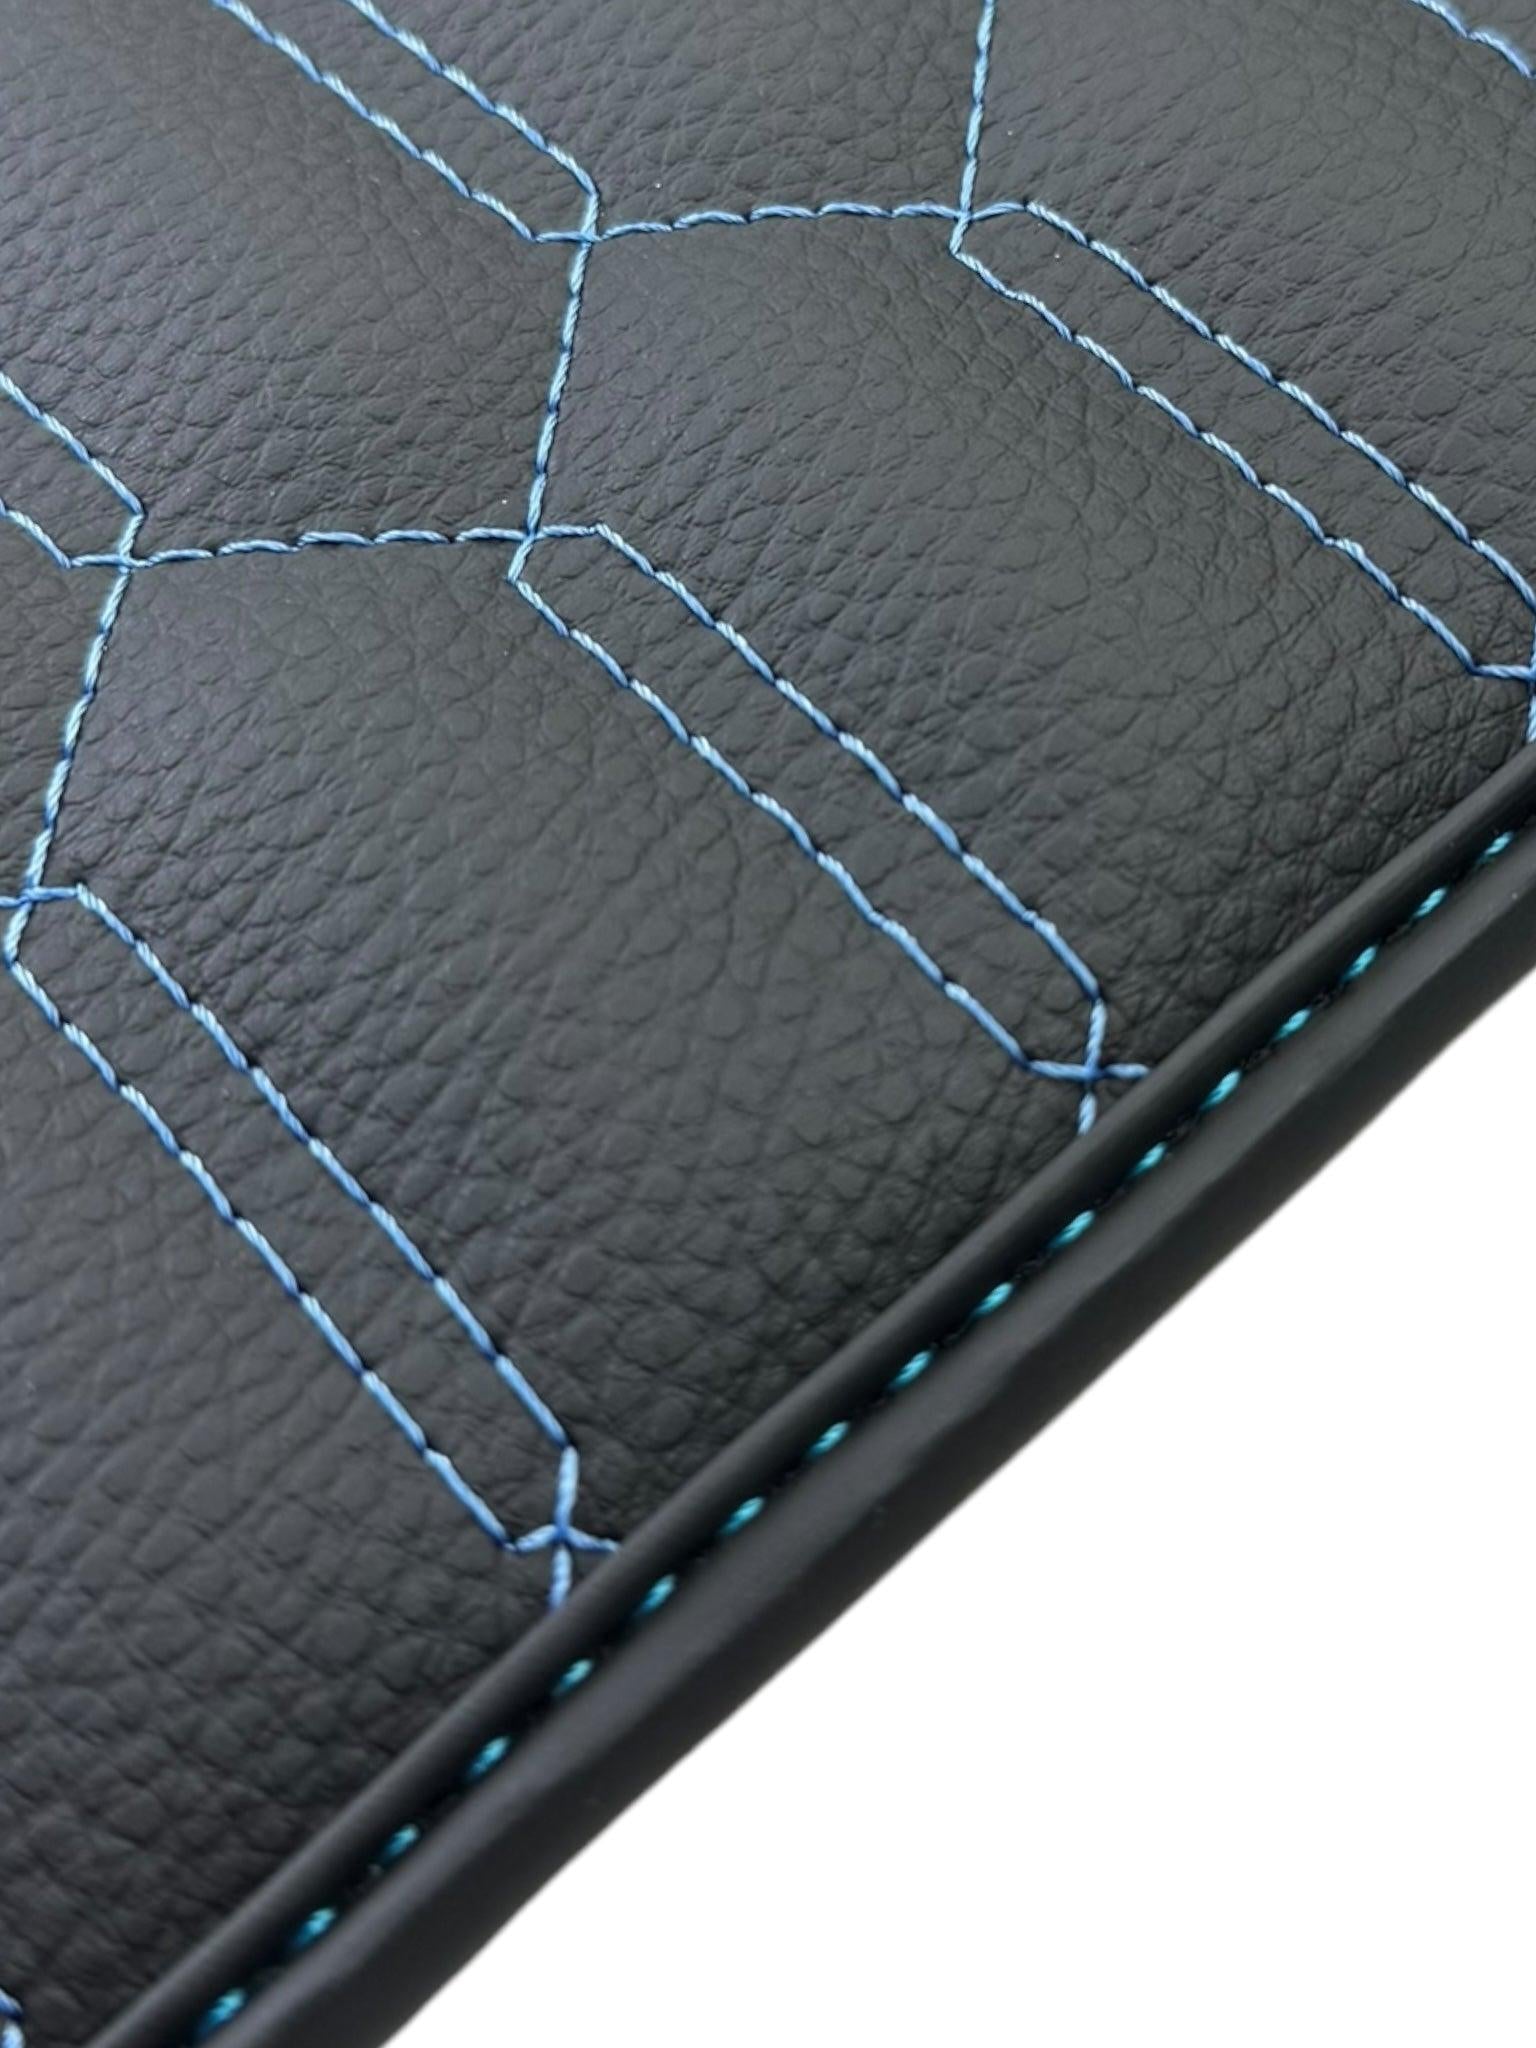 Leather Floor Mats for Lamborghini Urus with Blue Stitching